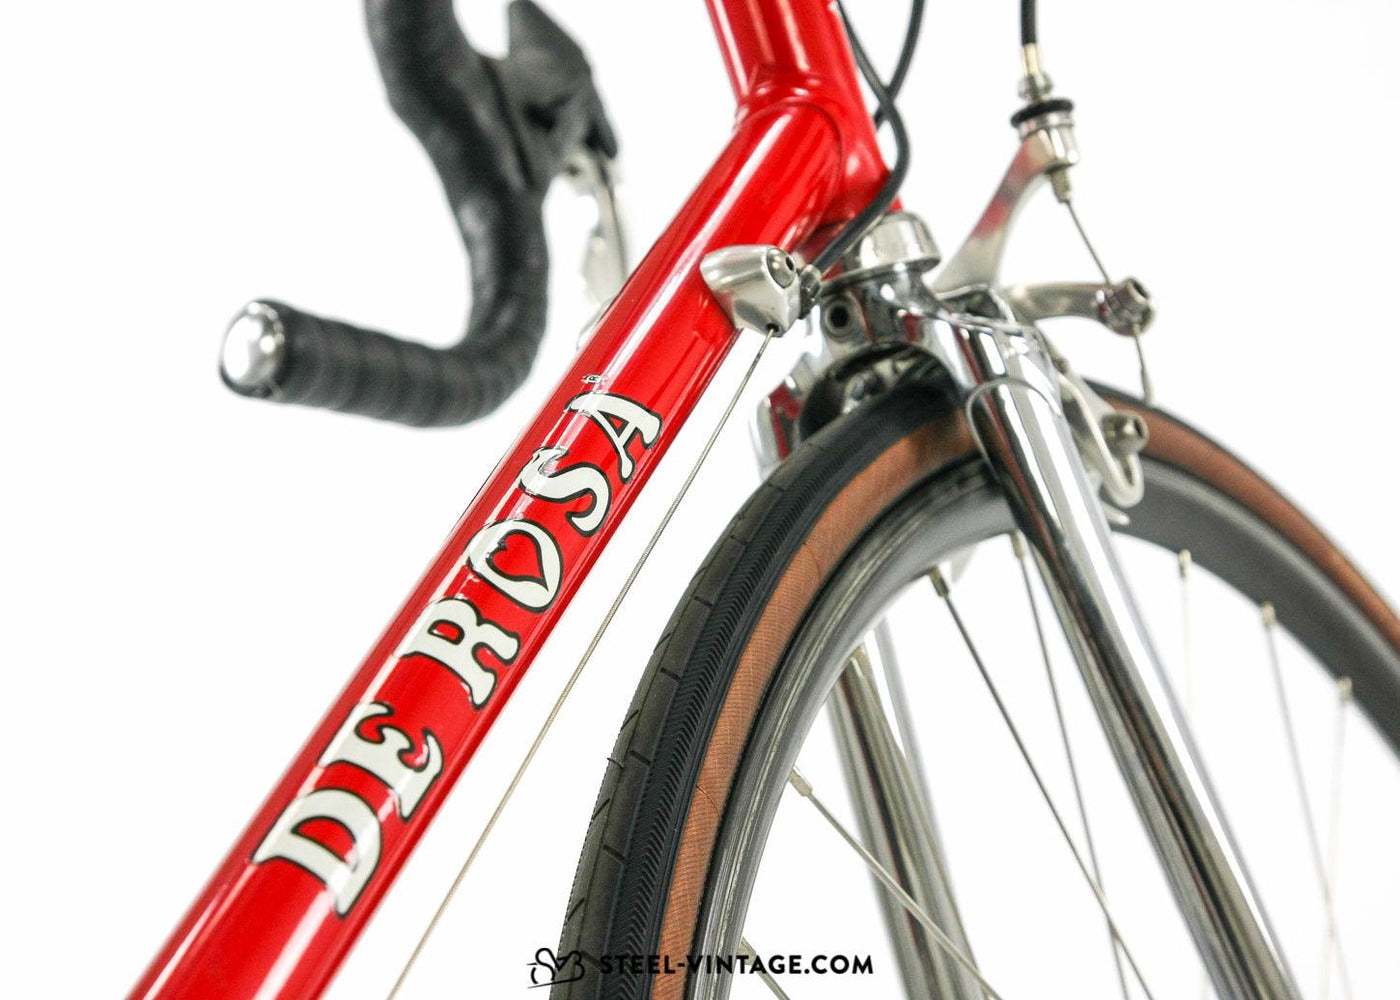 De Rosa Professional SLX Classic Road Bike 1990s - Steel Vintage Bikes